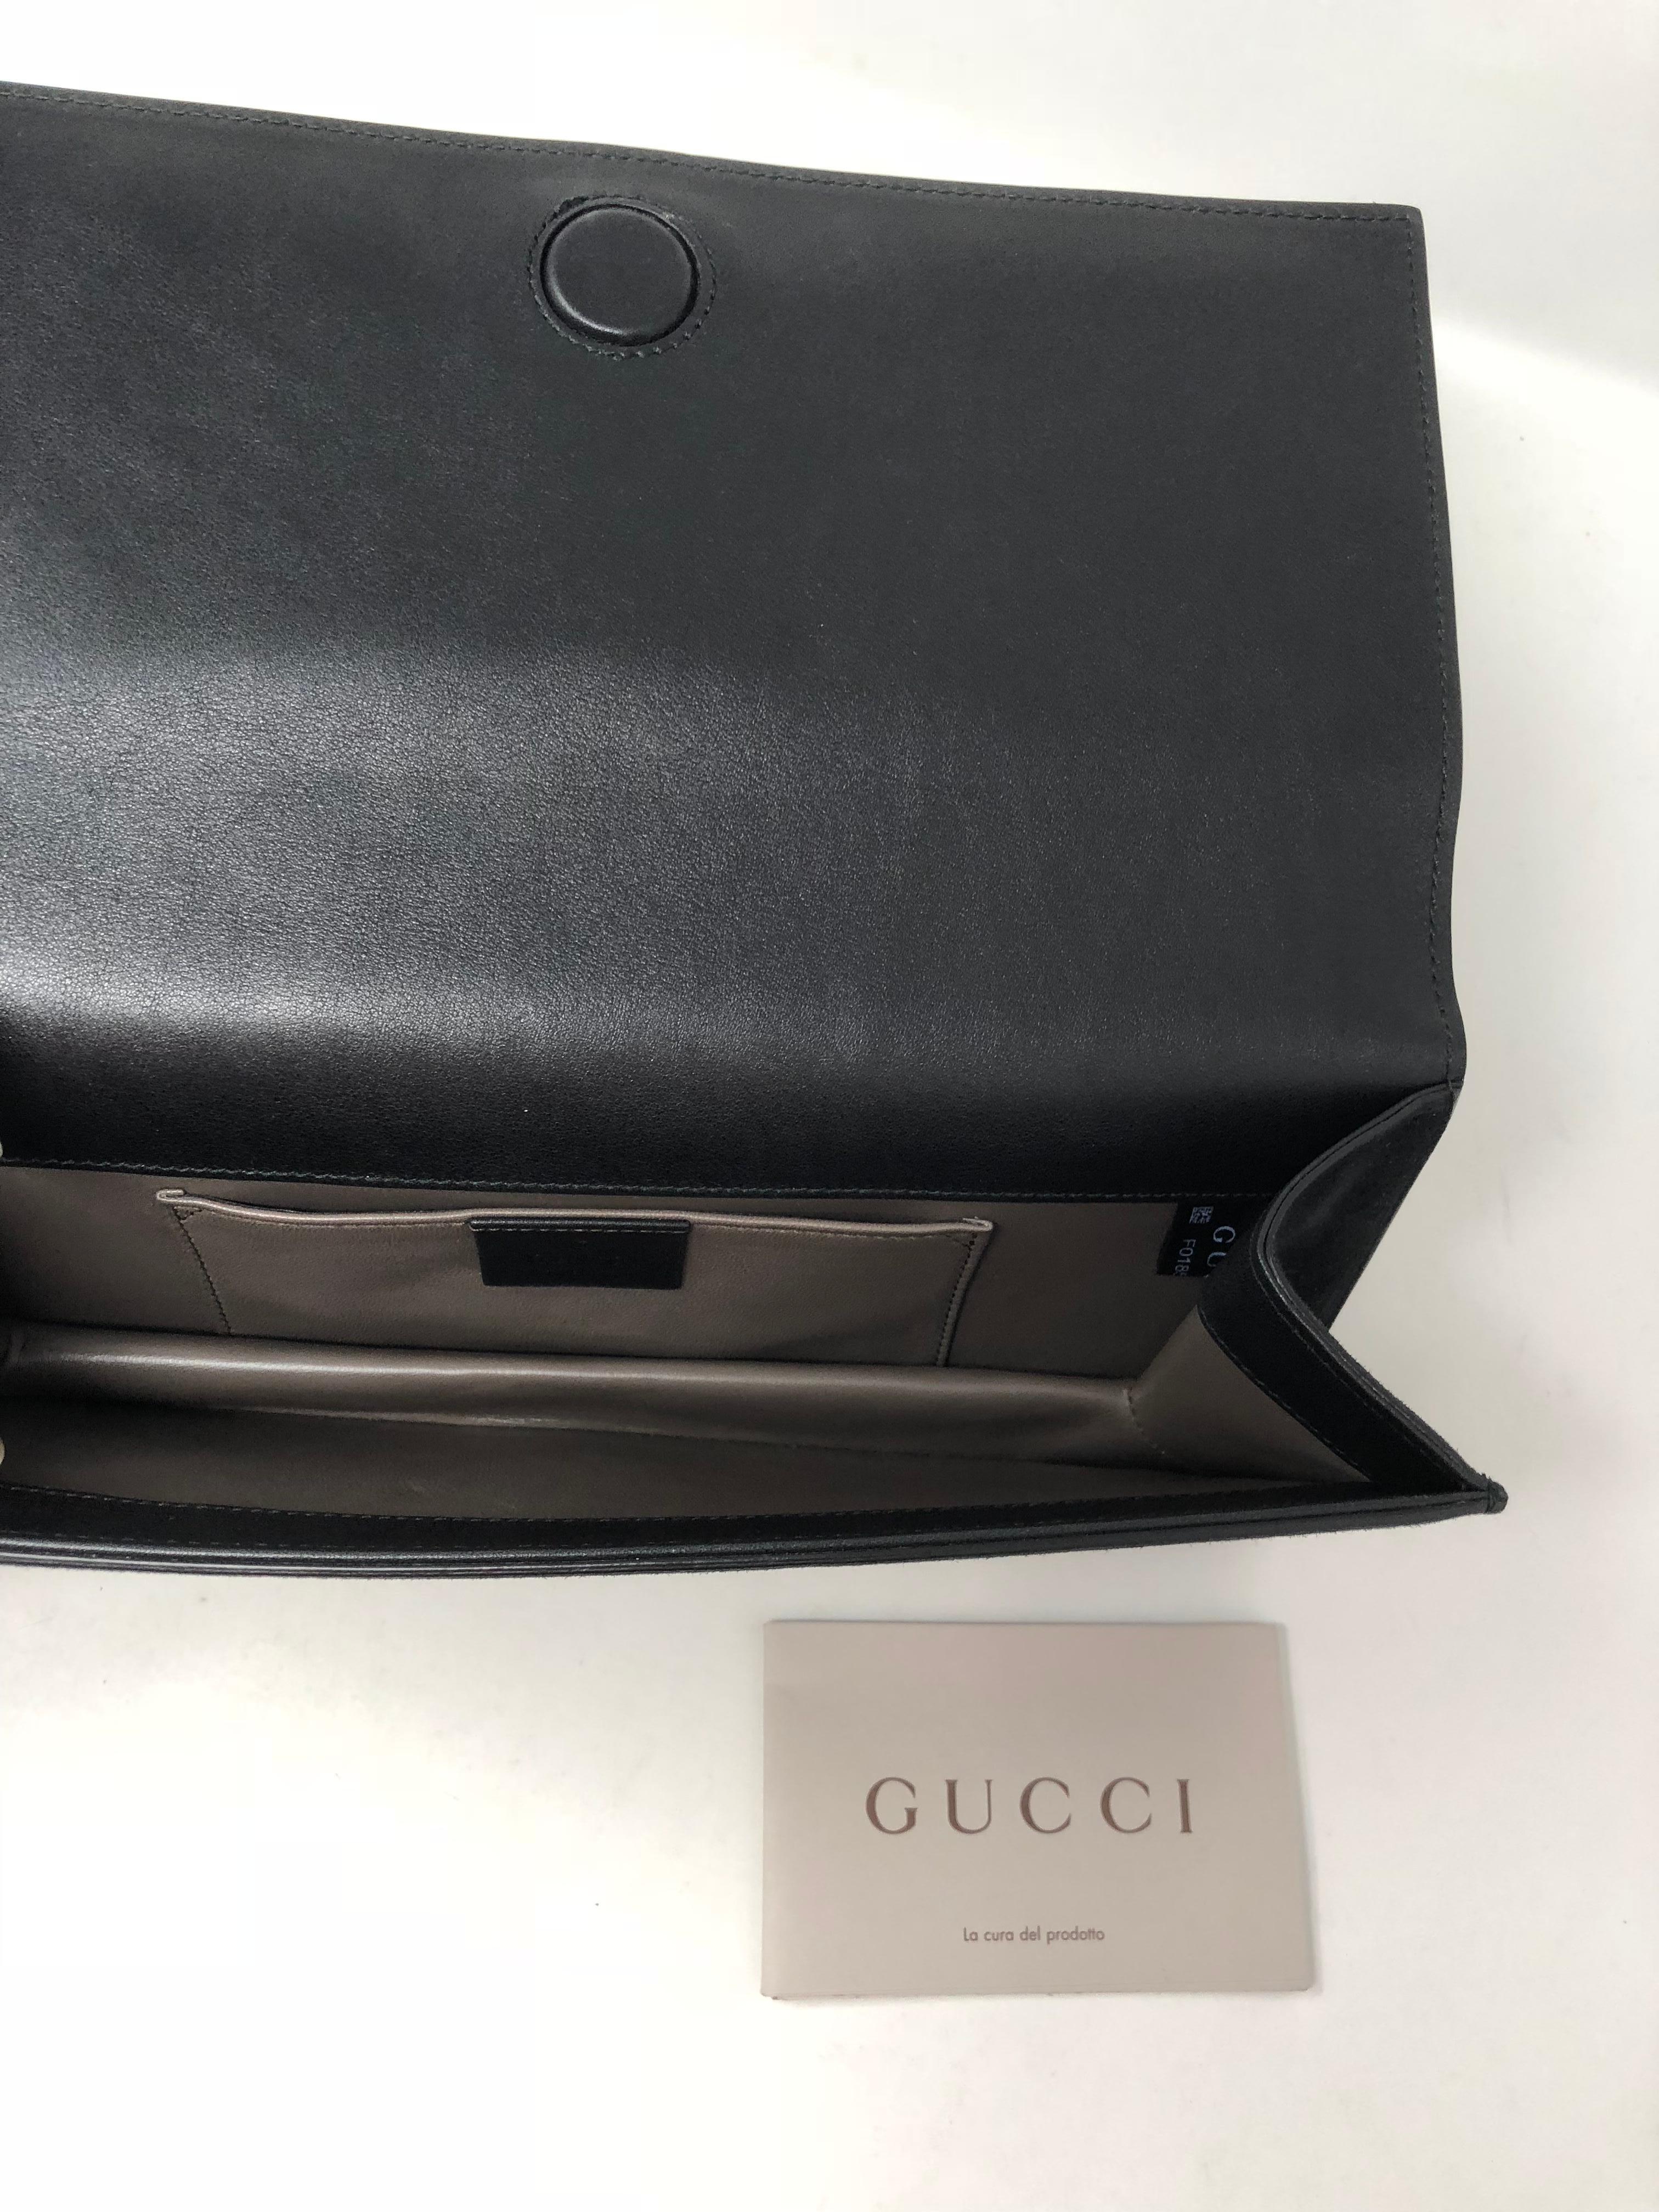 Gucci Black Suede Clutch with Swarovski Crystal Clasp 5